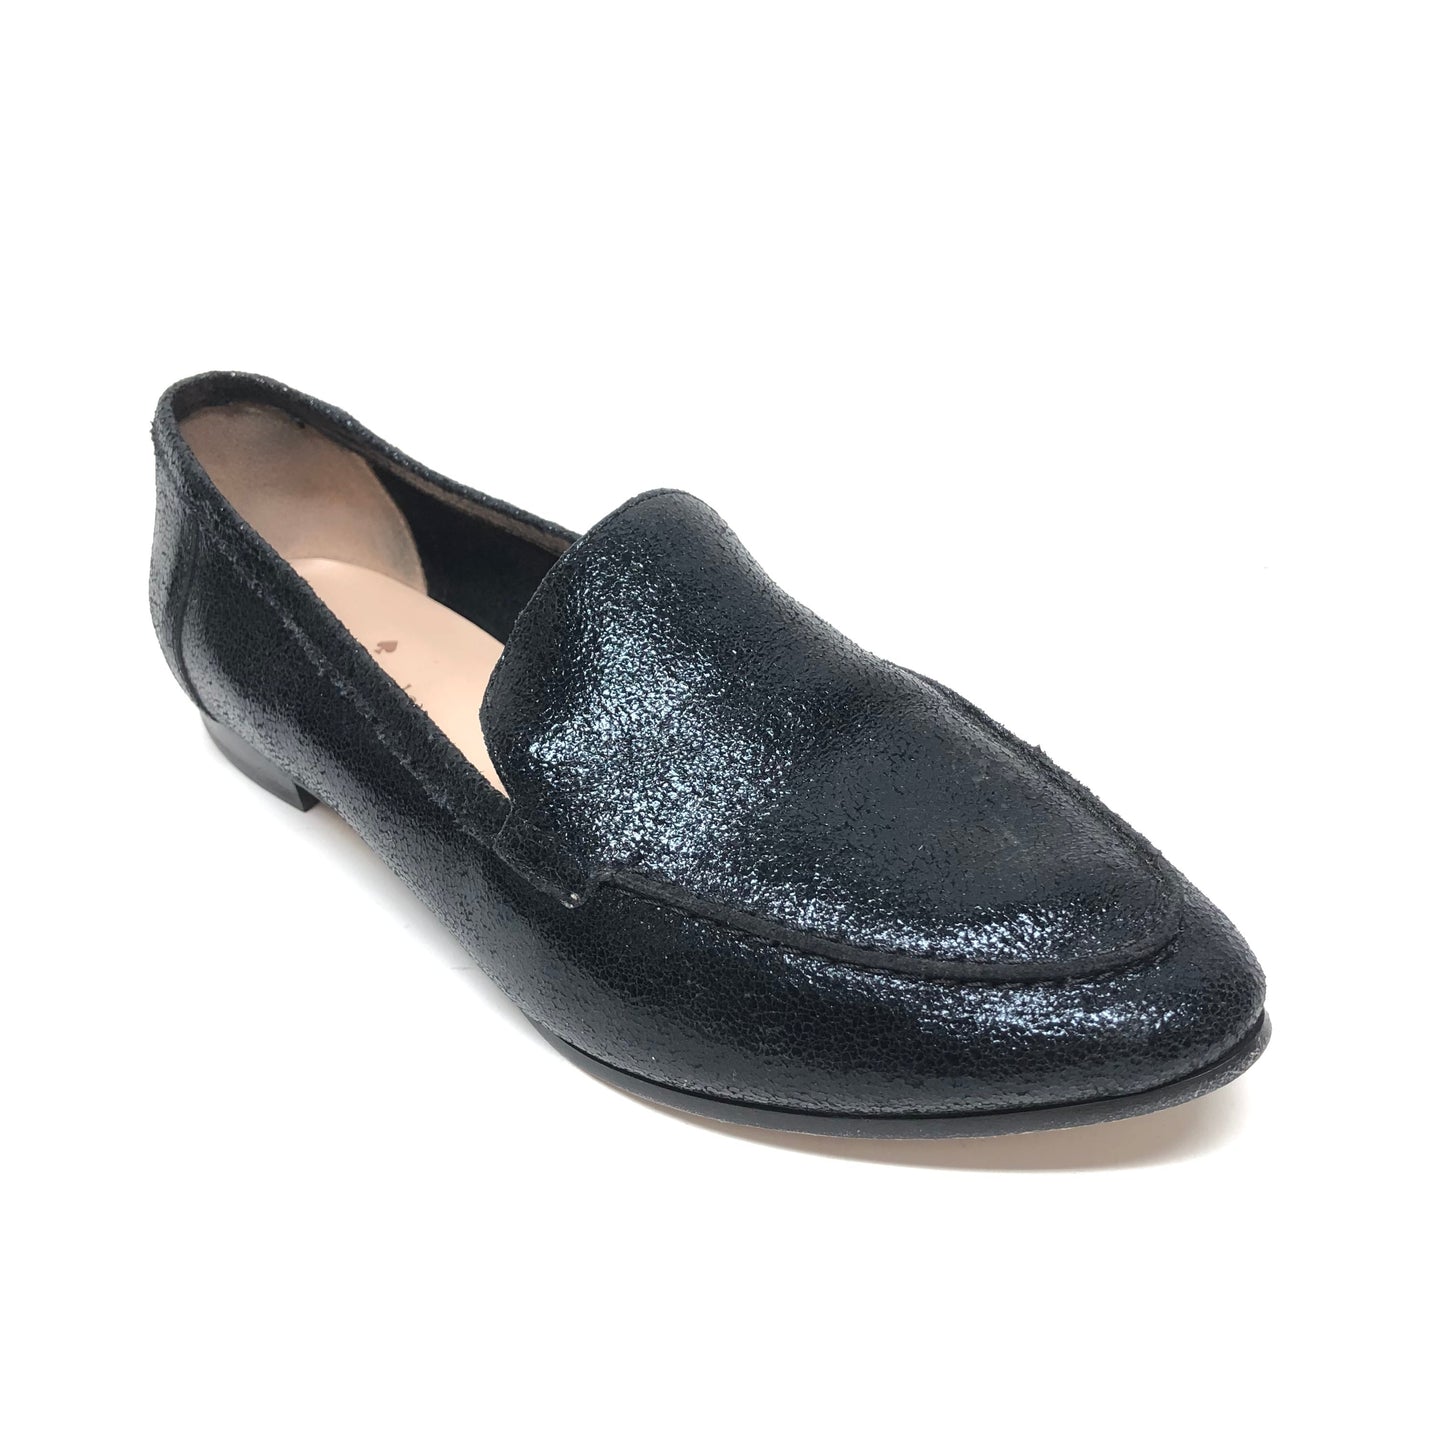 Black Shoes Flats Kate Spade, Size 7.5